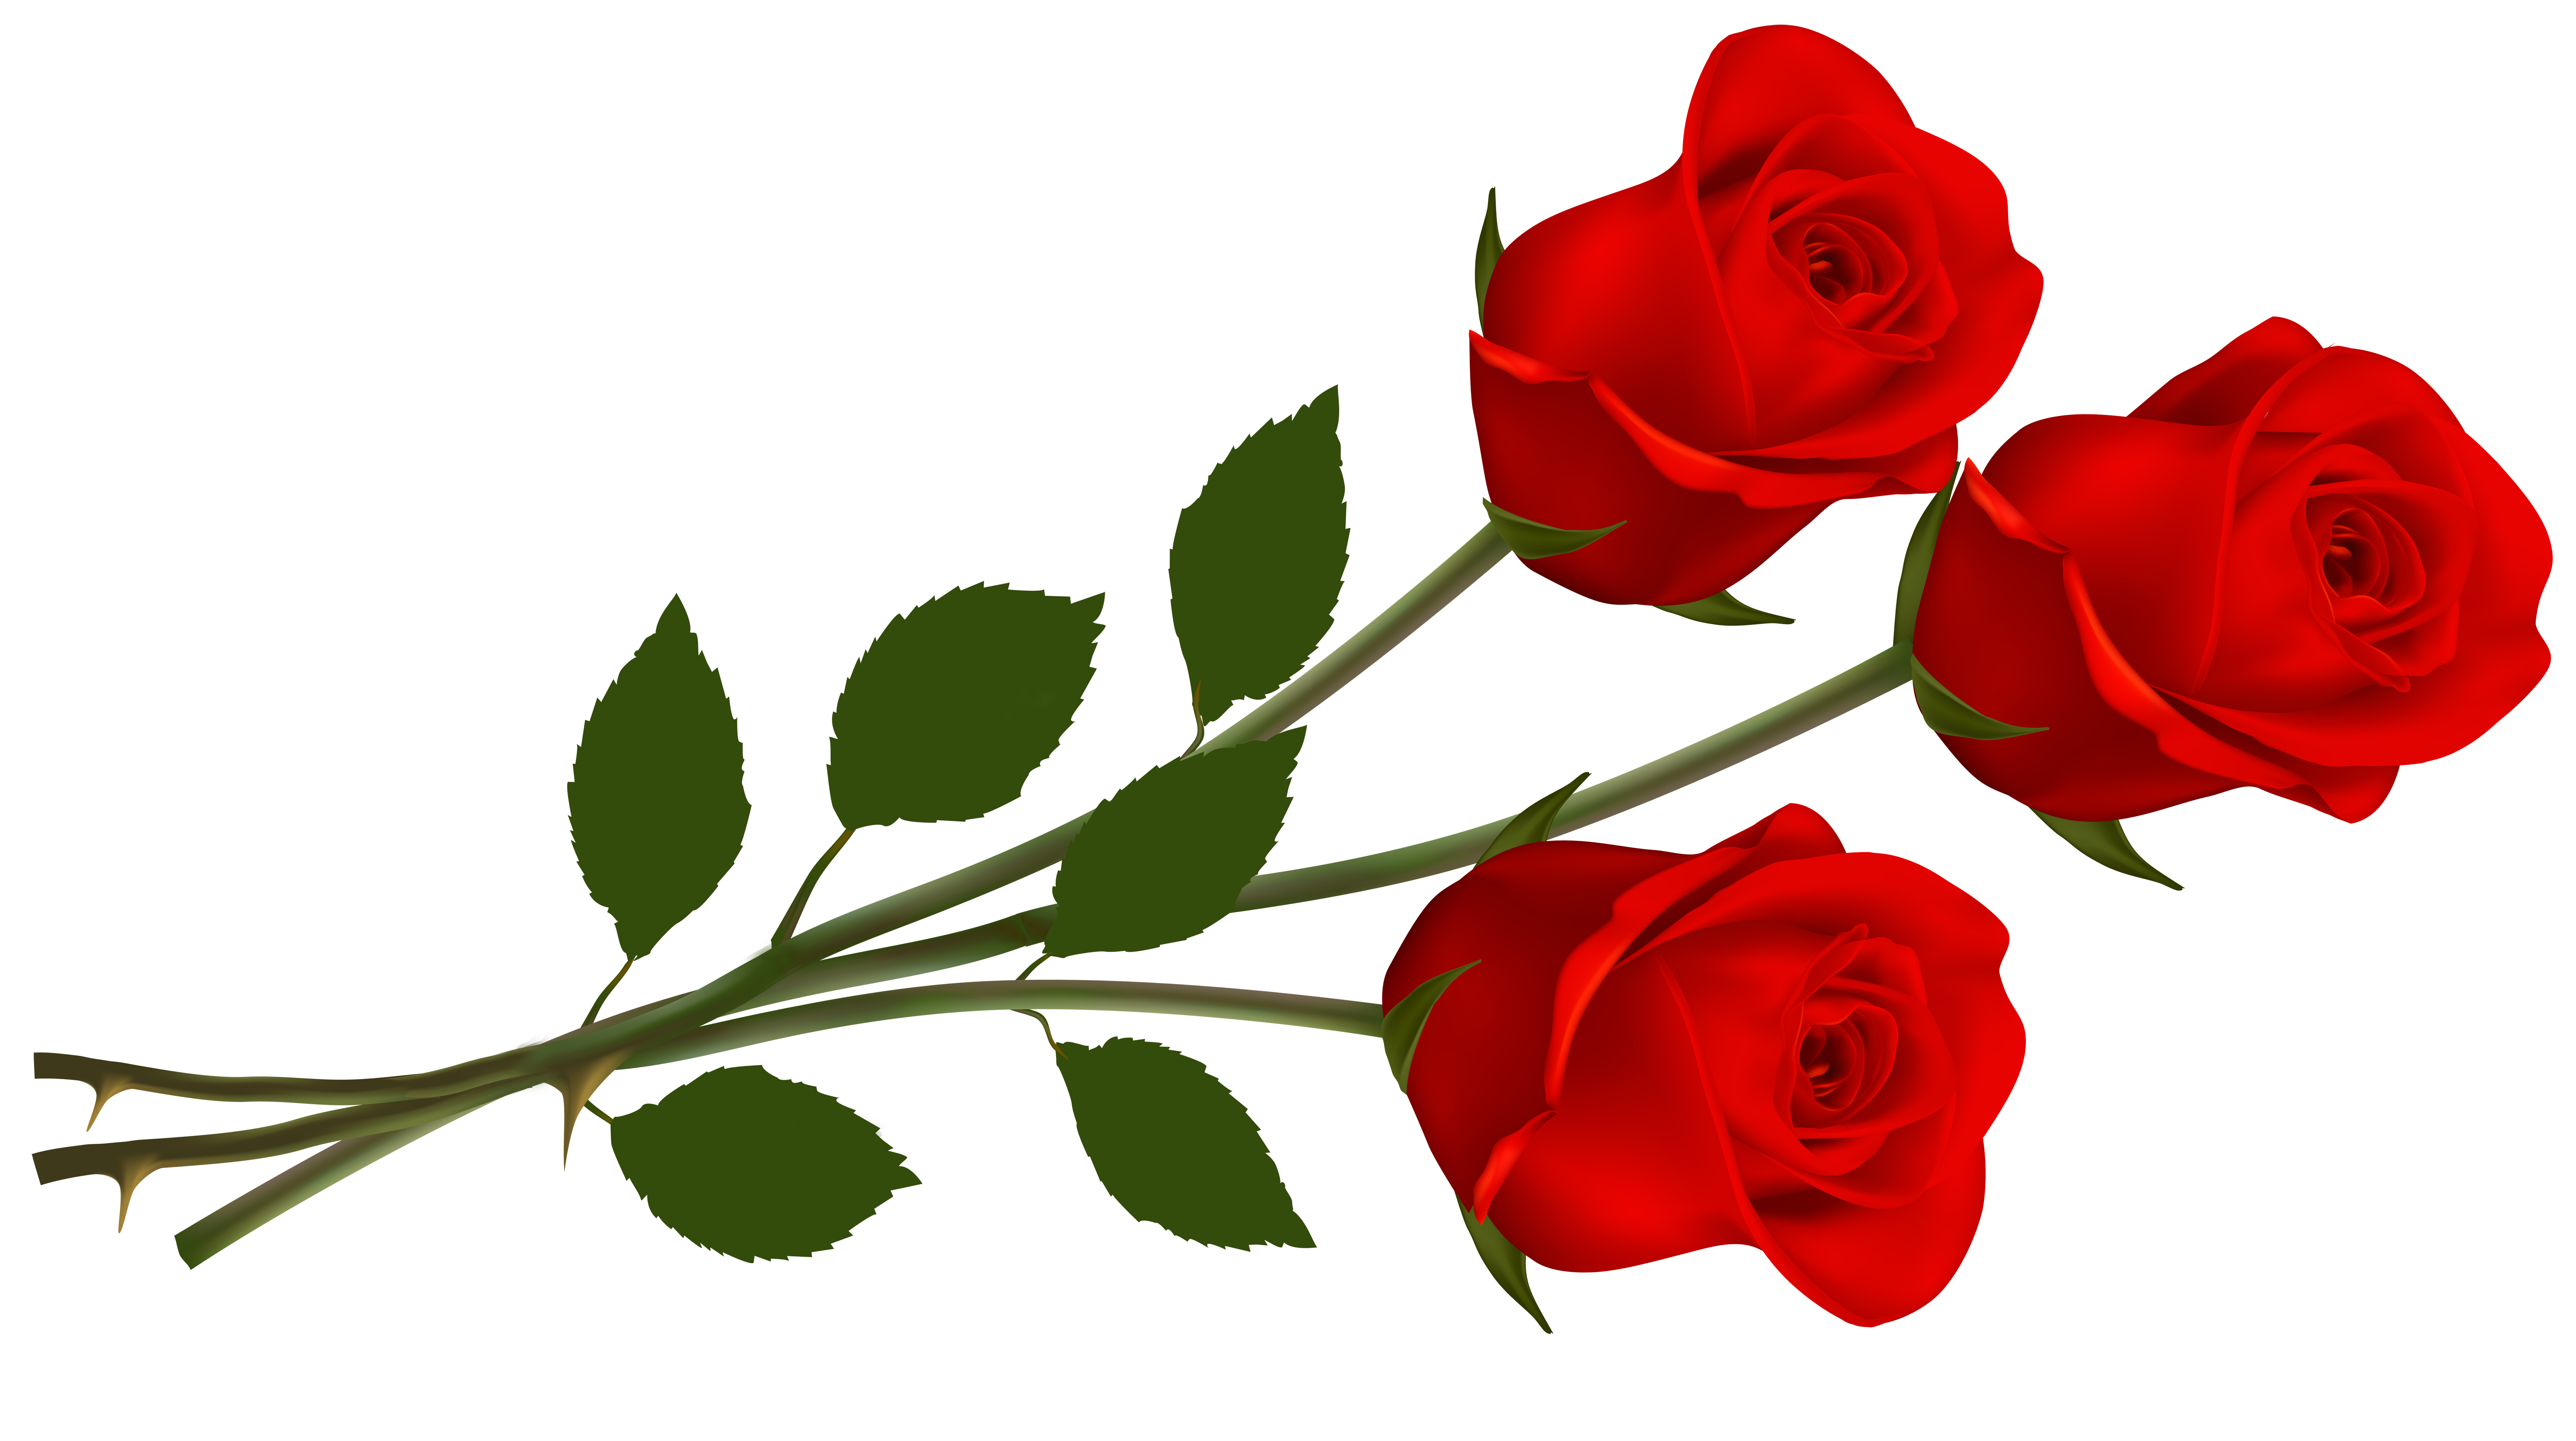 ... one dozen red roses ...